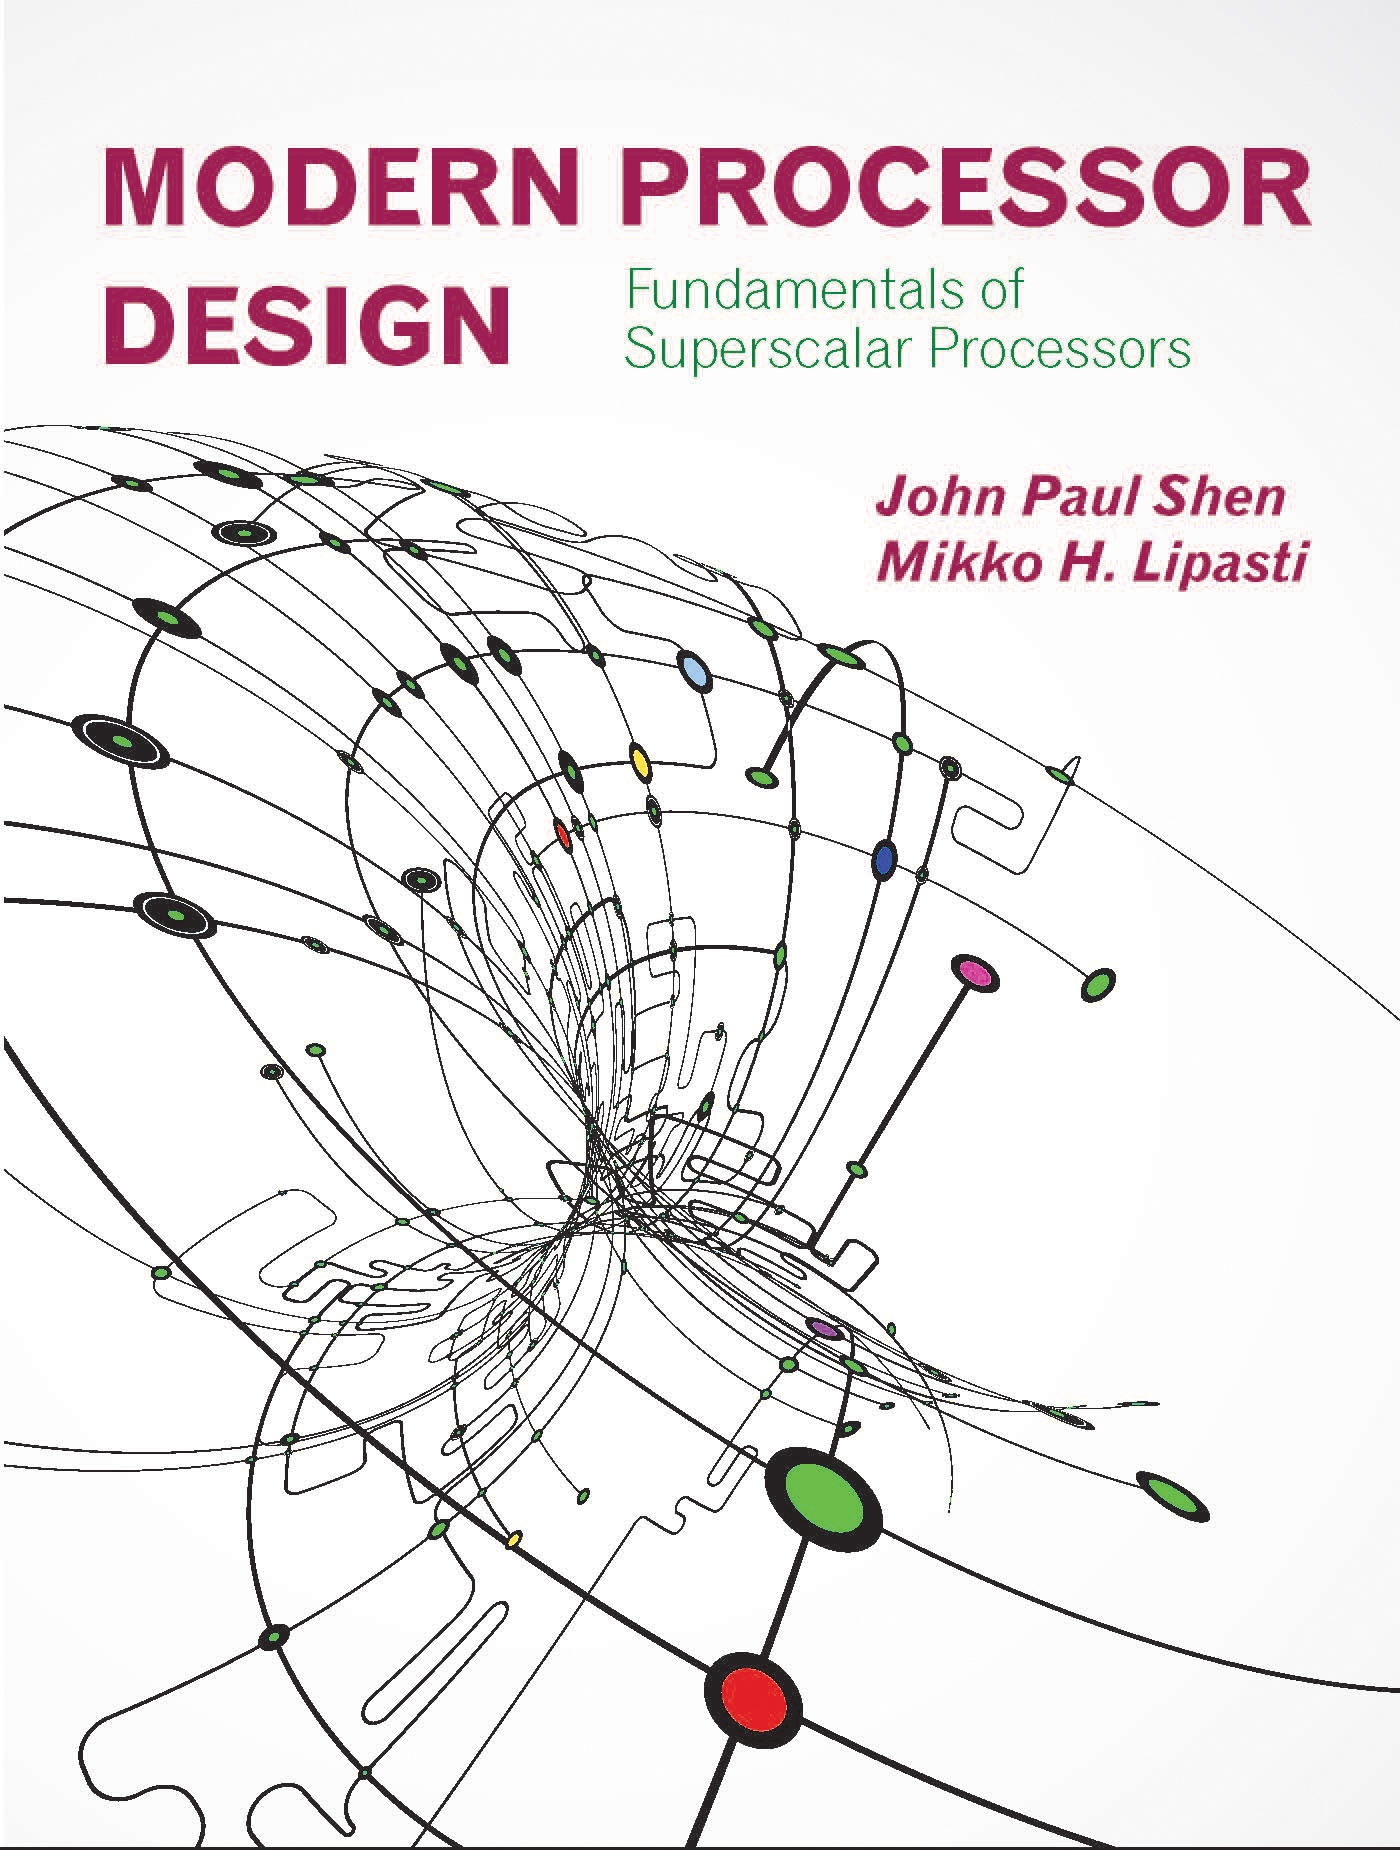 Modern Processor Design: Fundamentals of Superscalar Processors by John Paul Shen, Mikko H. Lipasti